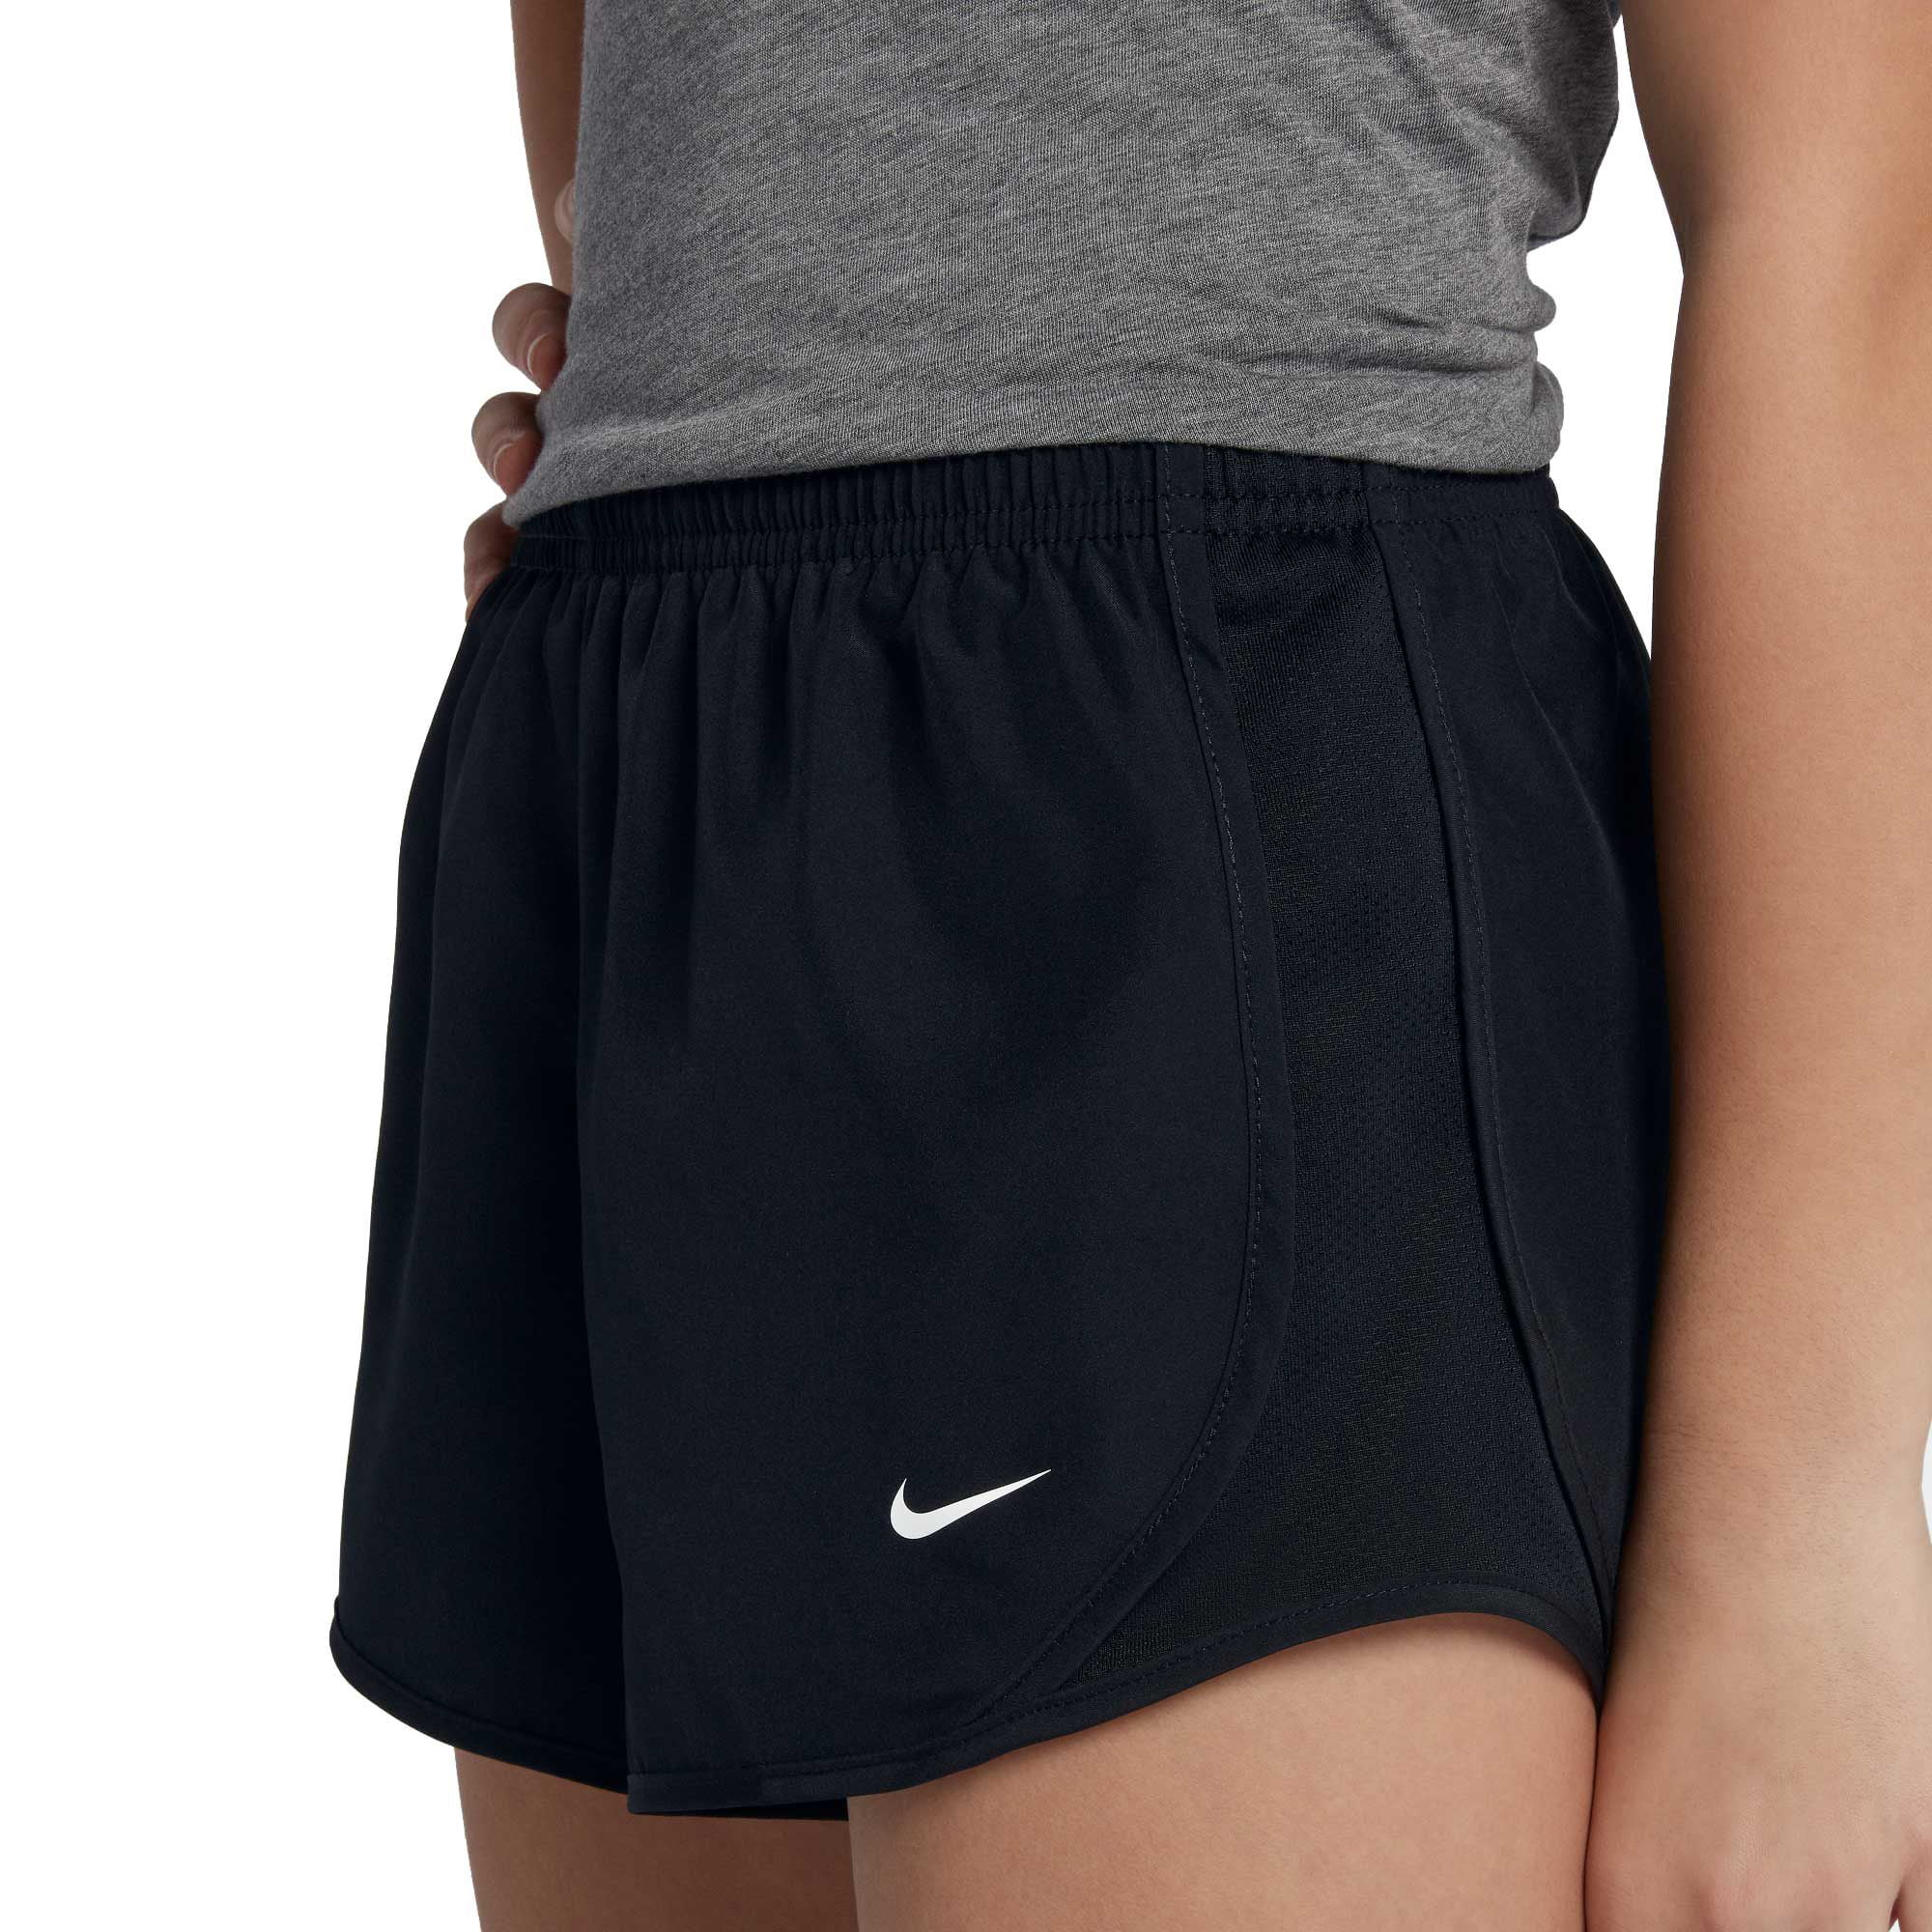 Nike - Nike Girls' Dry Tempo Running Shorts - Walmart.com - Walmart.com